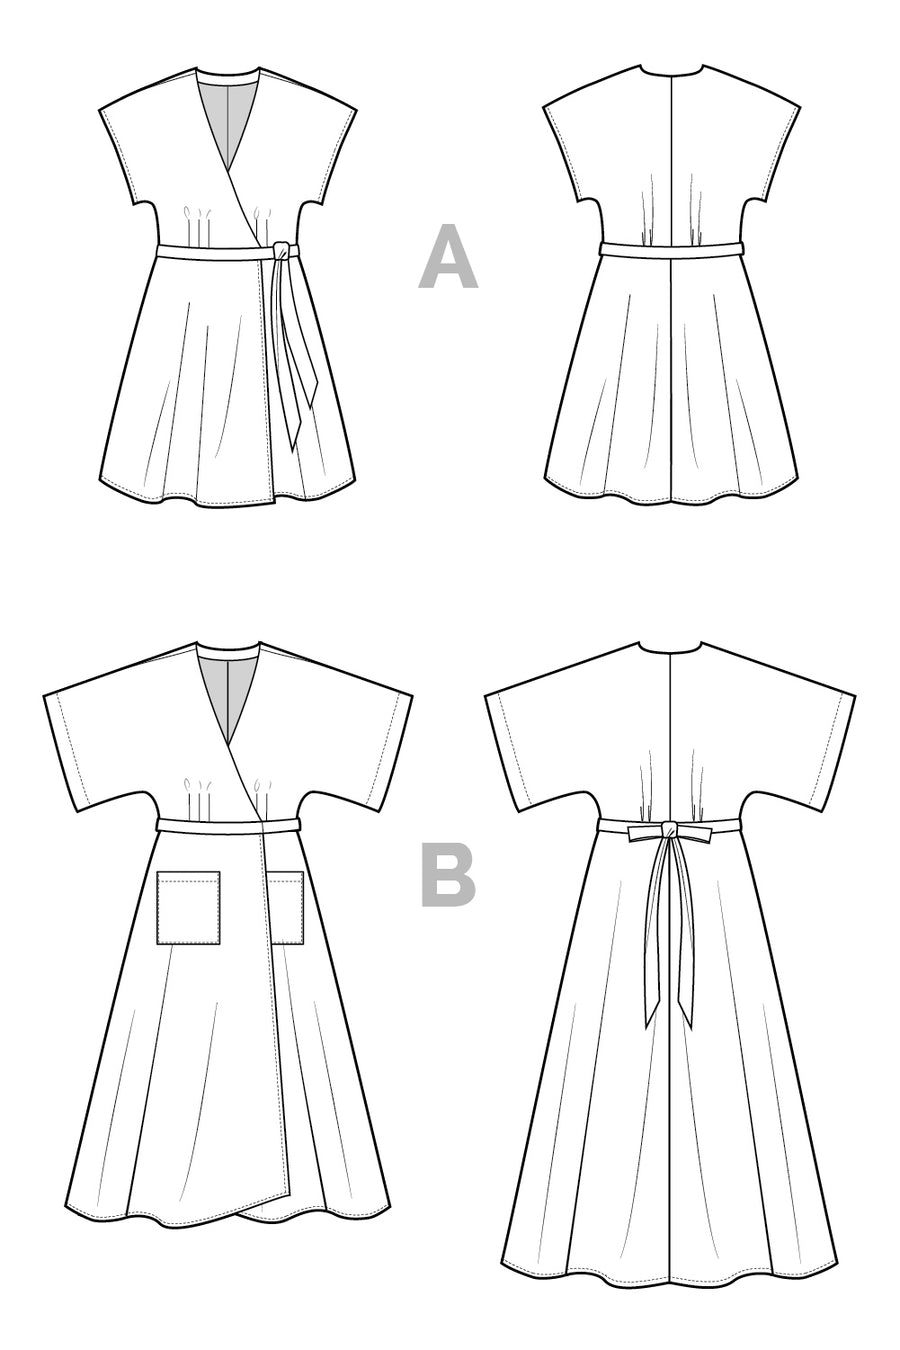 Easy DIY Beach Wrap Cover Up Free Sew Pattern - Video  Dress patterns diy,  Wrap dress pattern, Wrap dress pattern diy